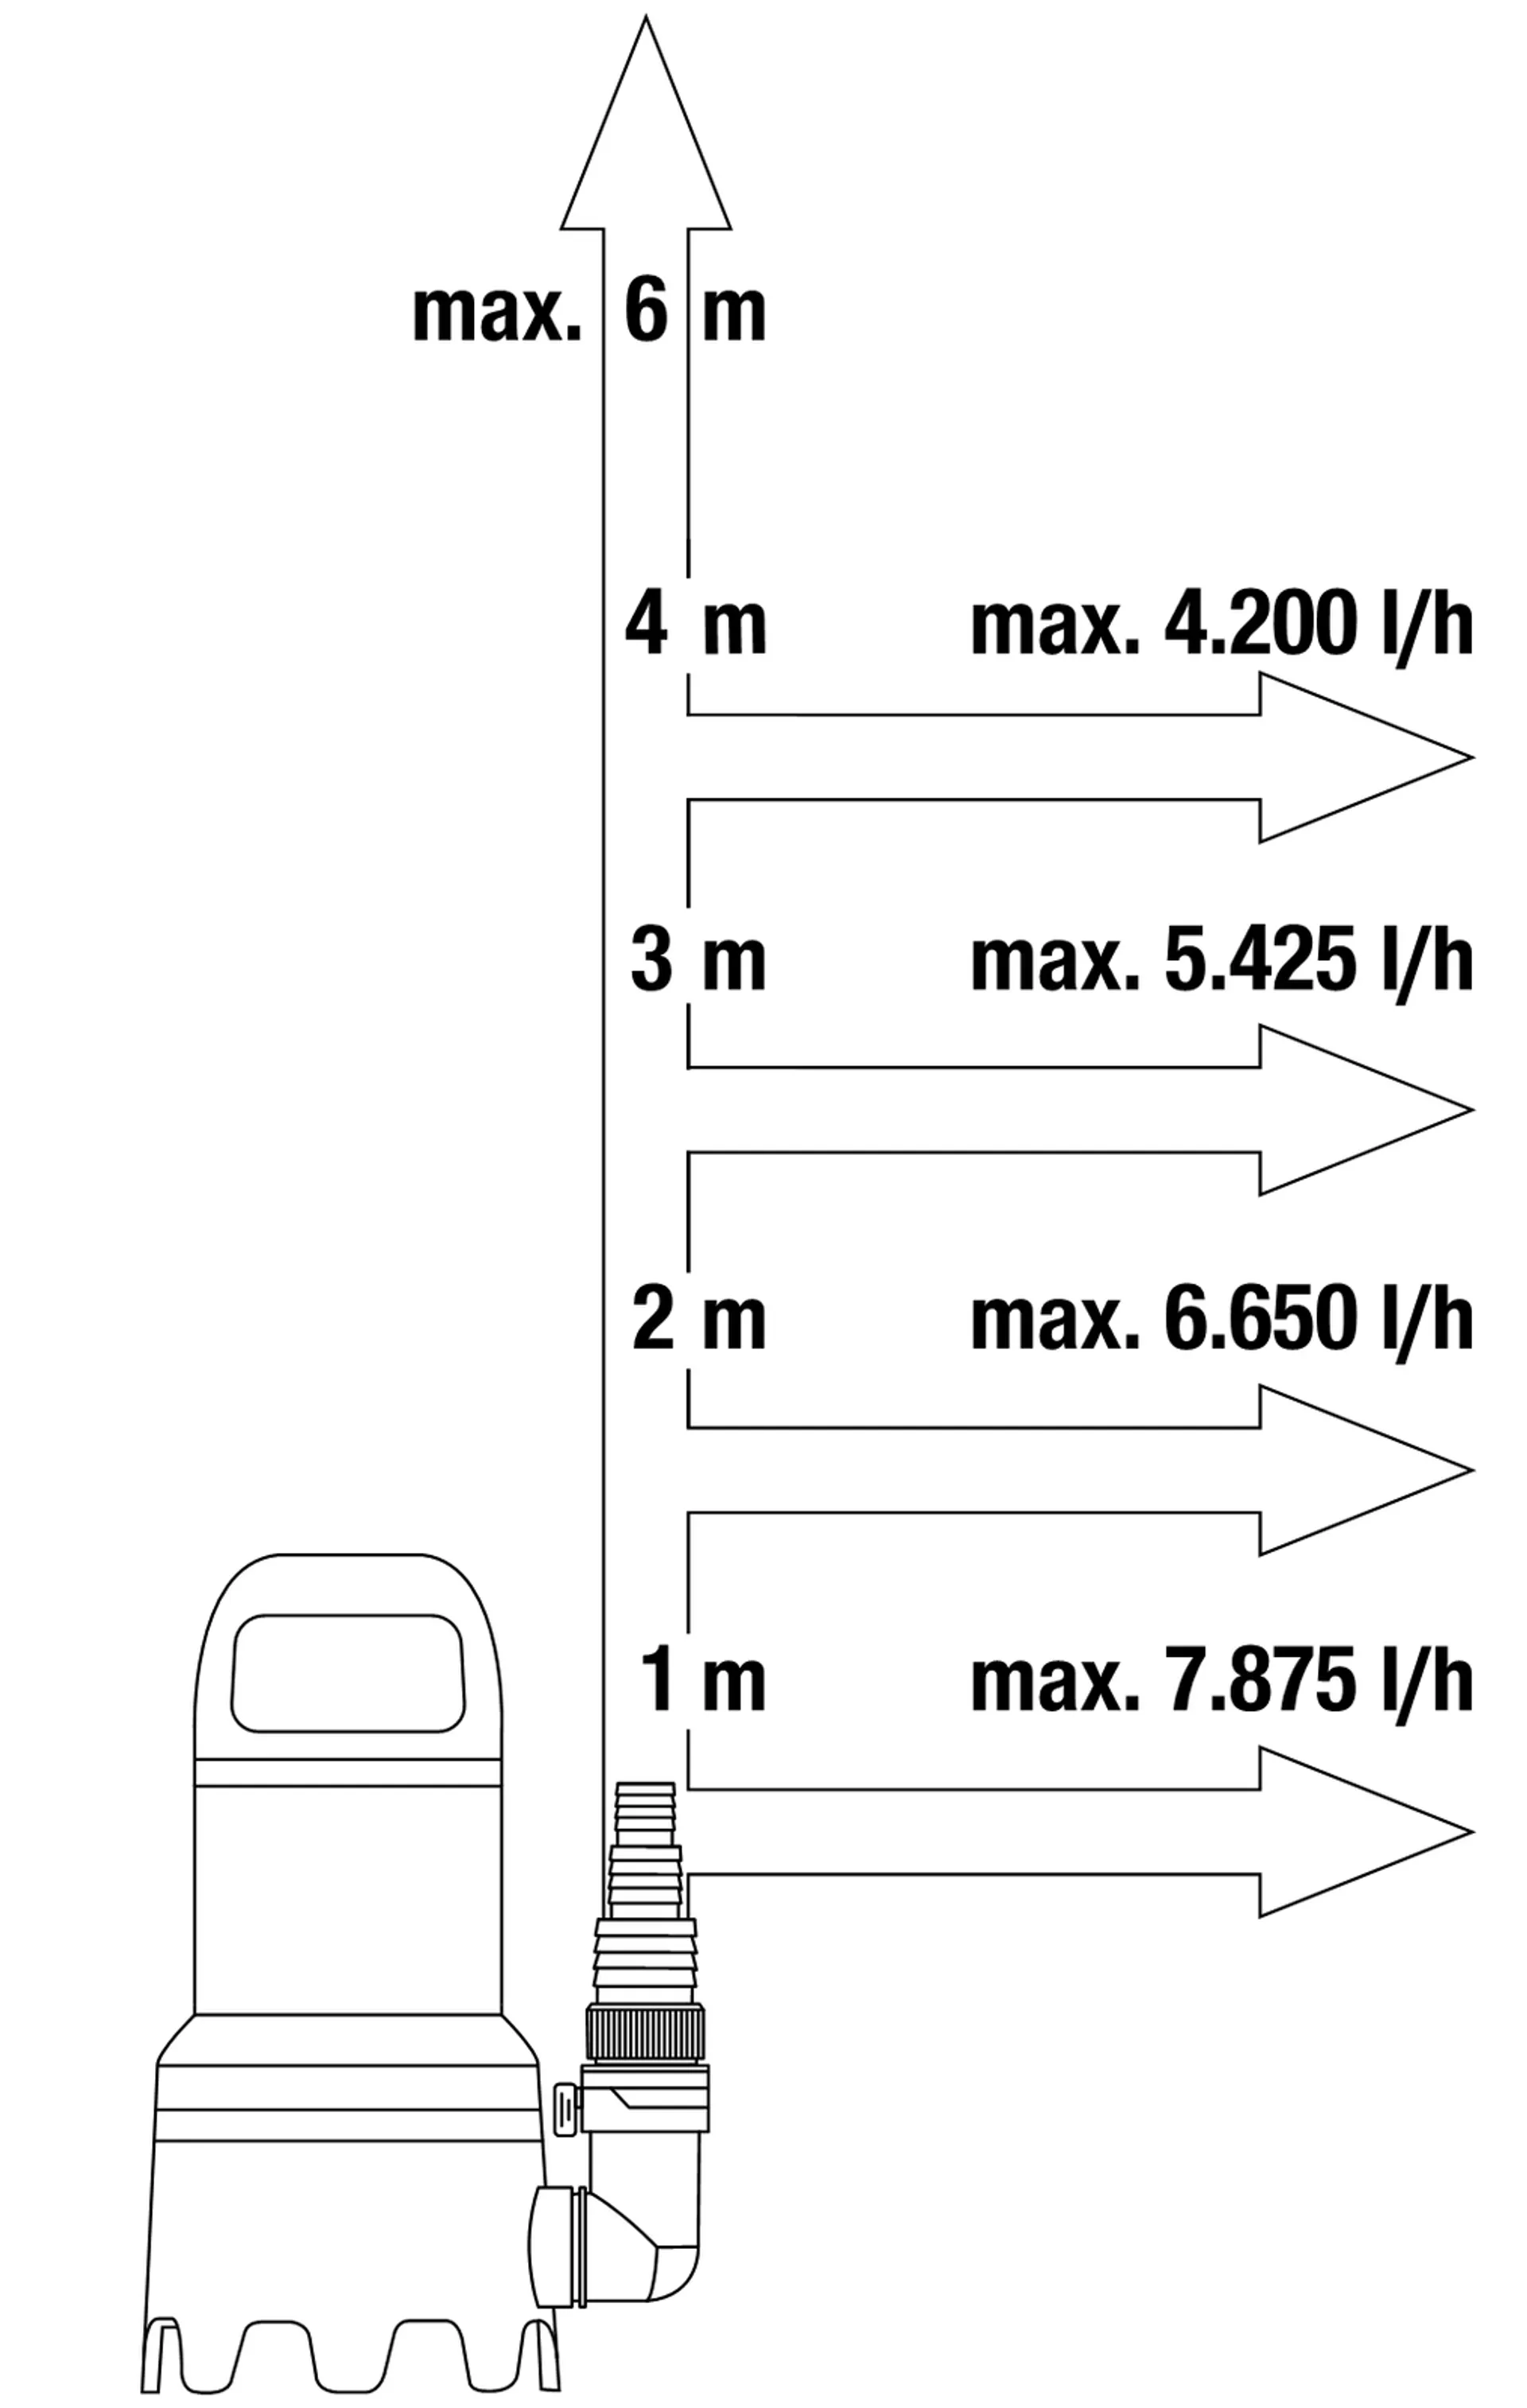 Uppopumppu 9000 likaiselle vedelle300 W, 9000 l/h, 0,6 bar, partikkelikoko 25 mm. - 3